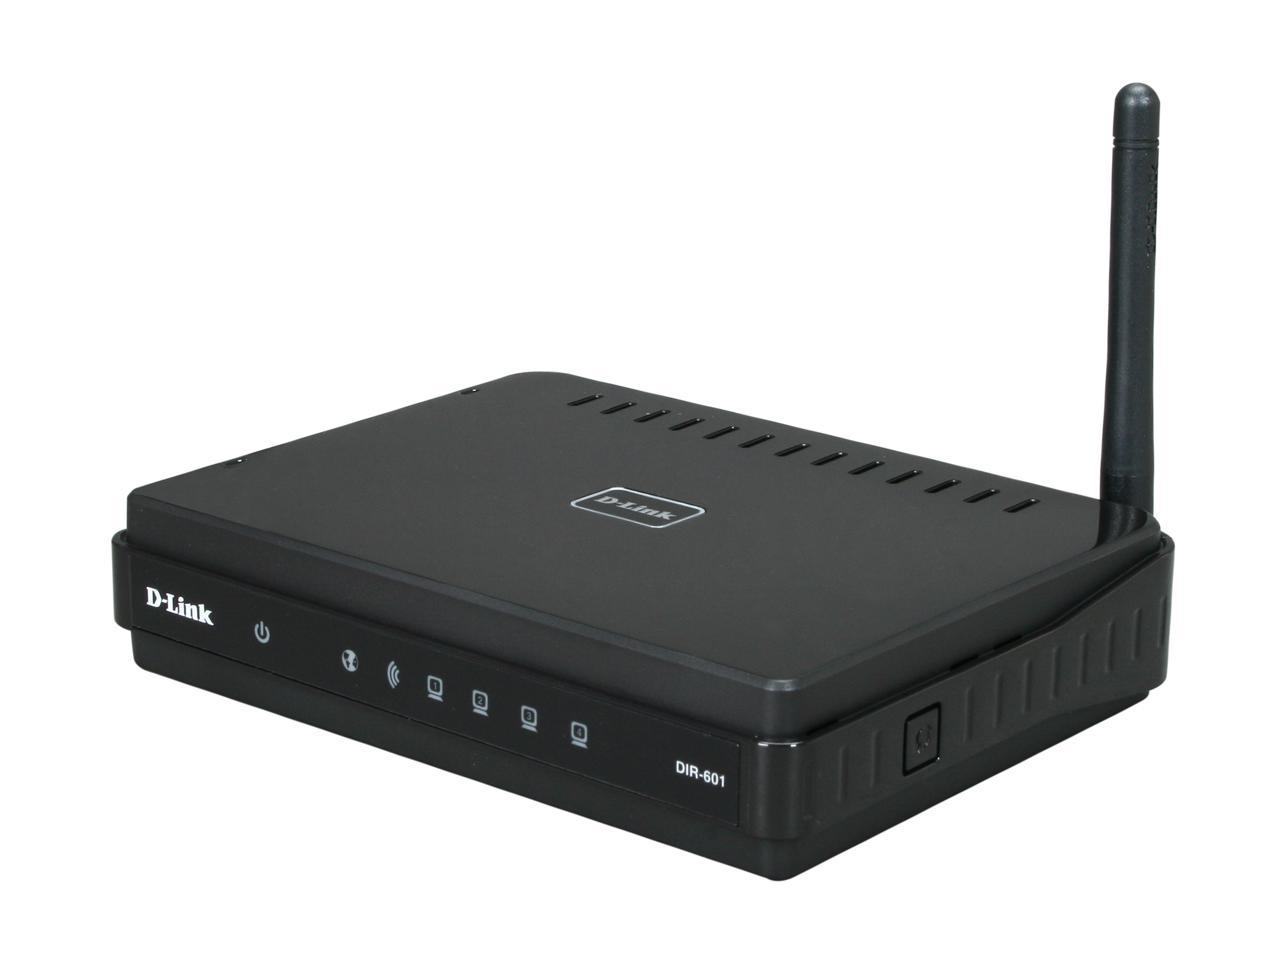 irony sacred Inheritance D-Link DIR-601 Wireless N150 Home Router - Newegg.com